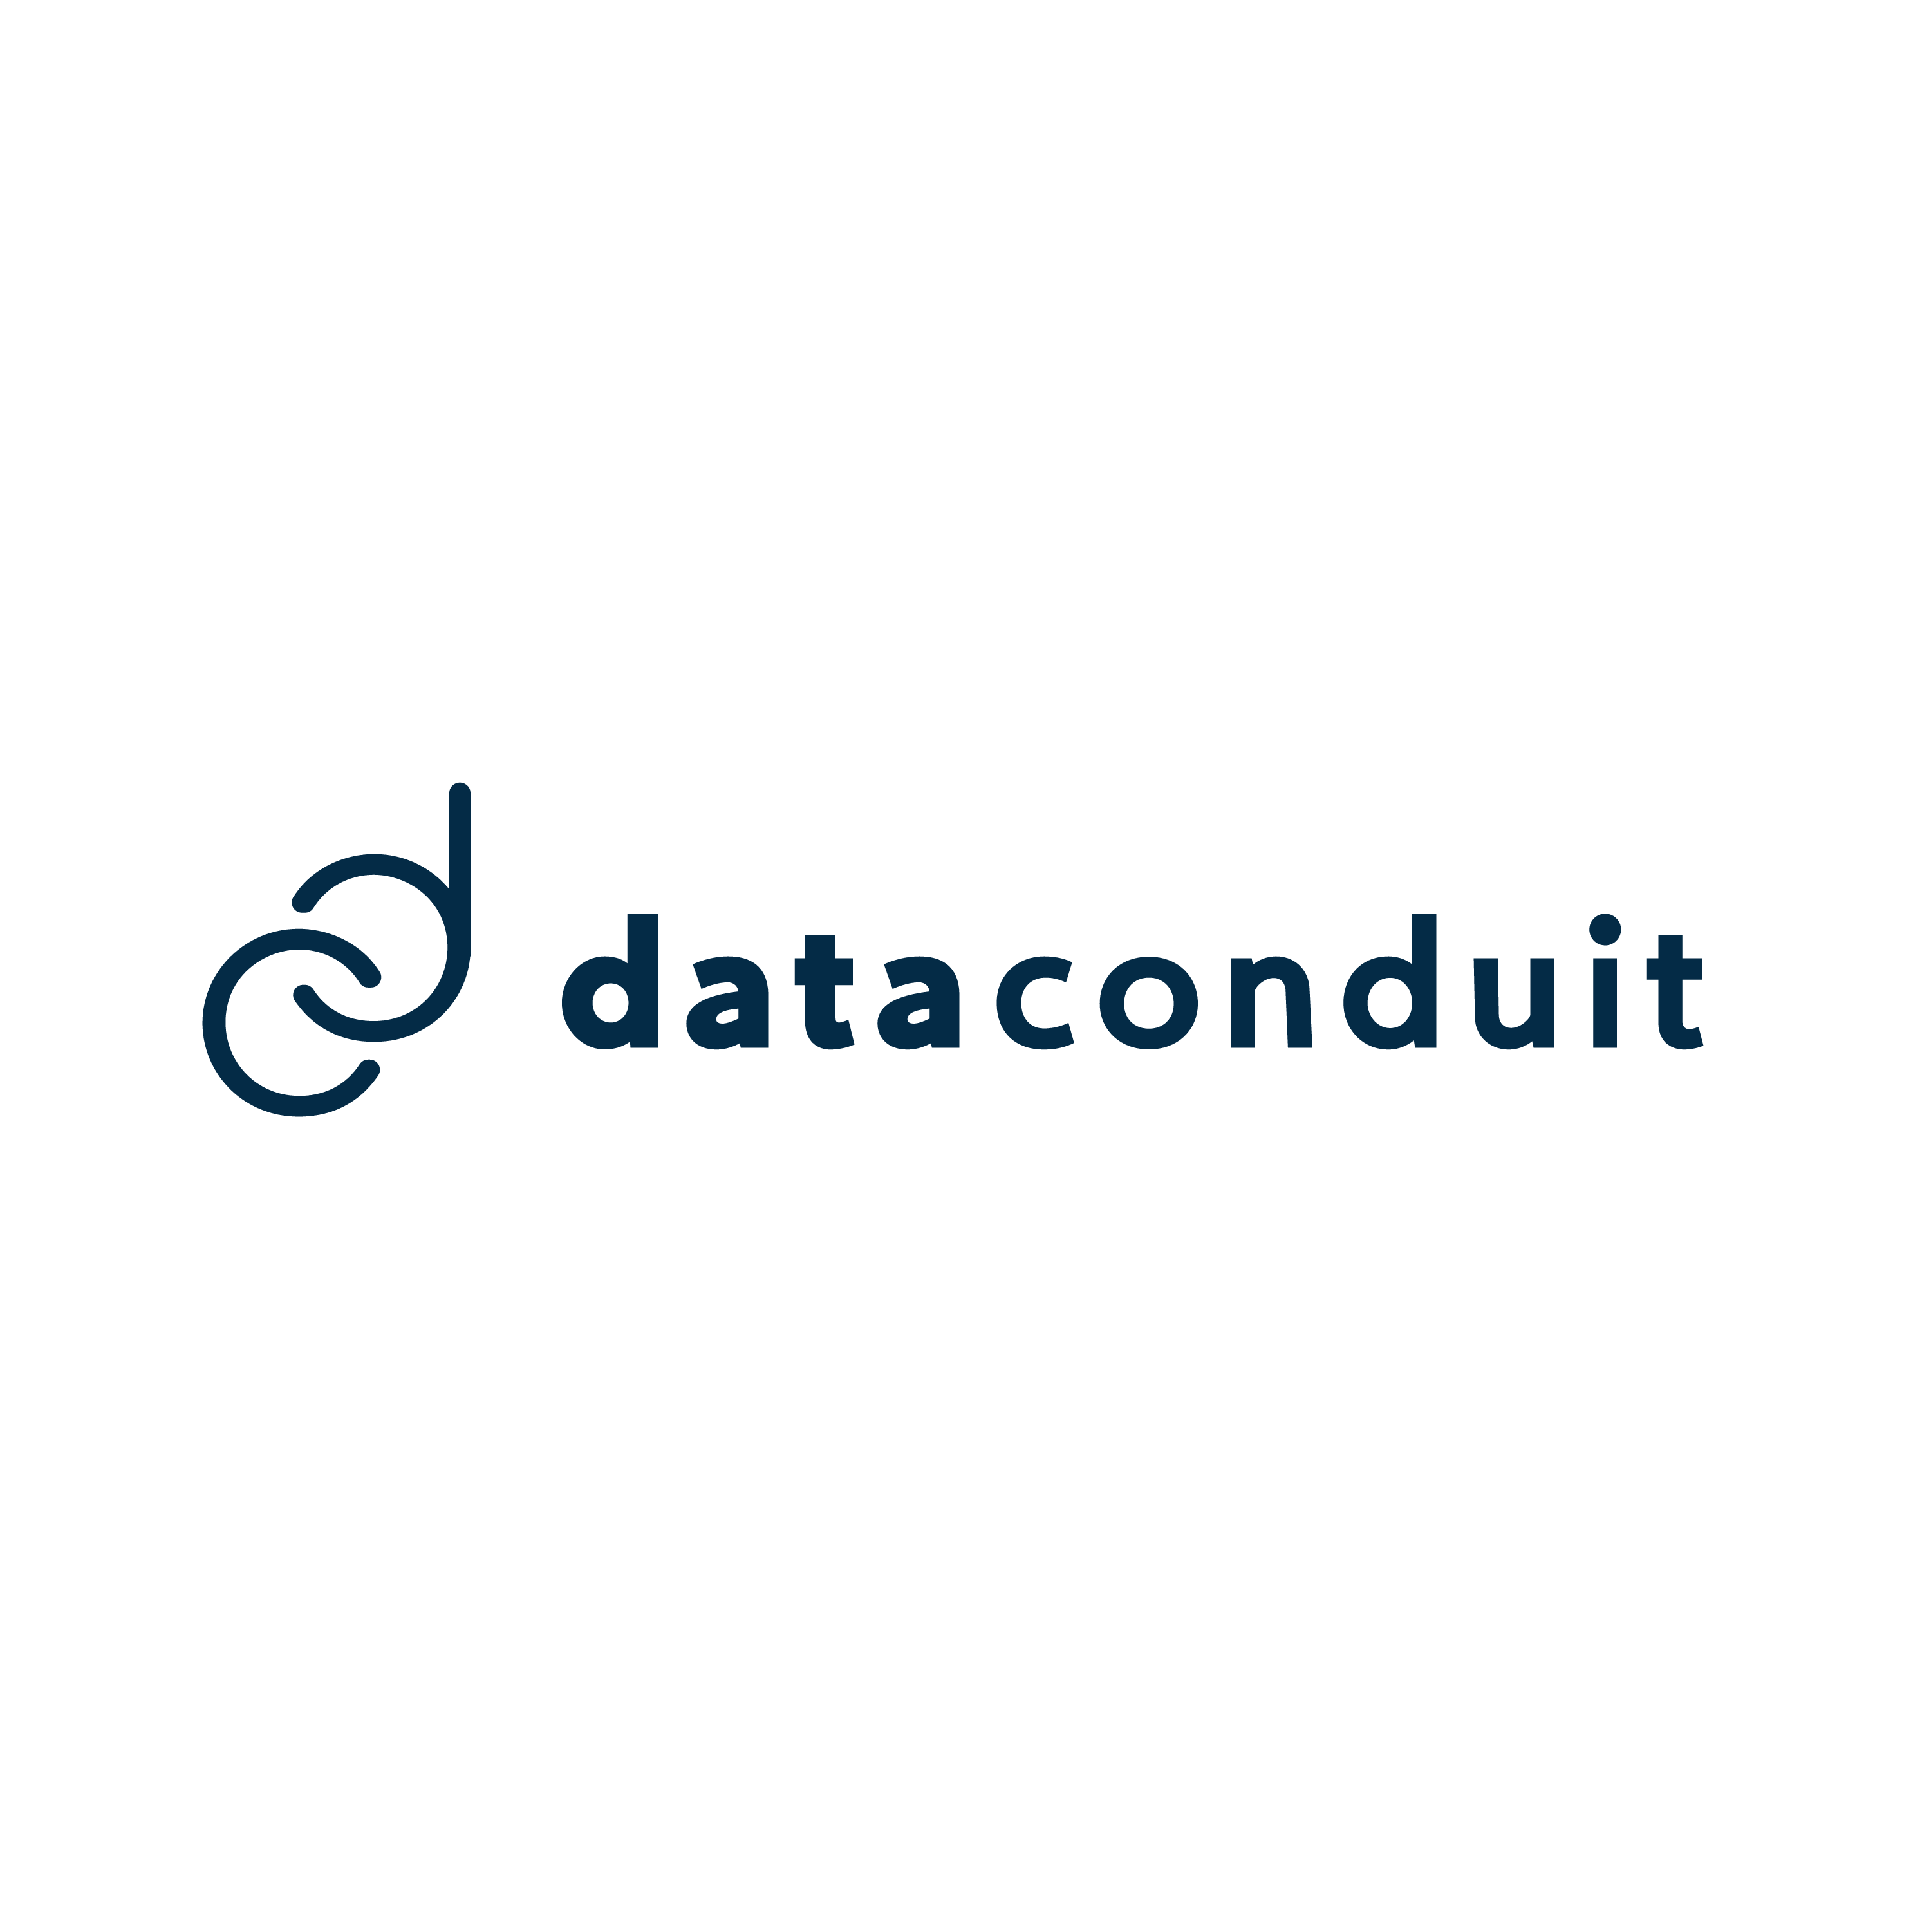 dataconduit logo